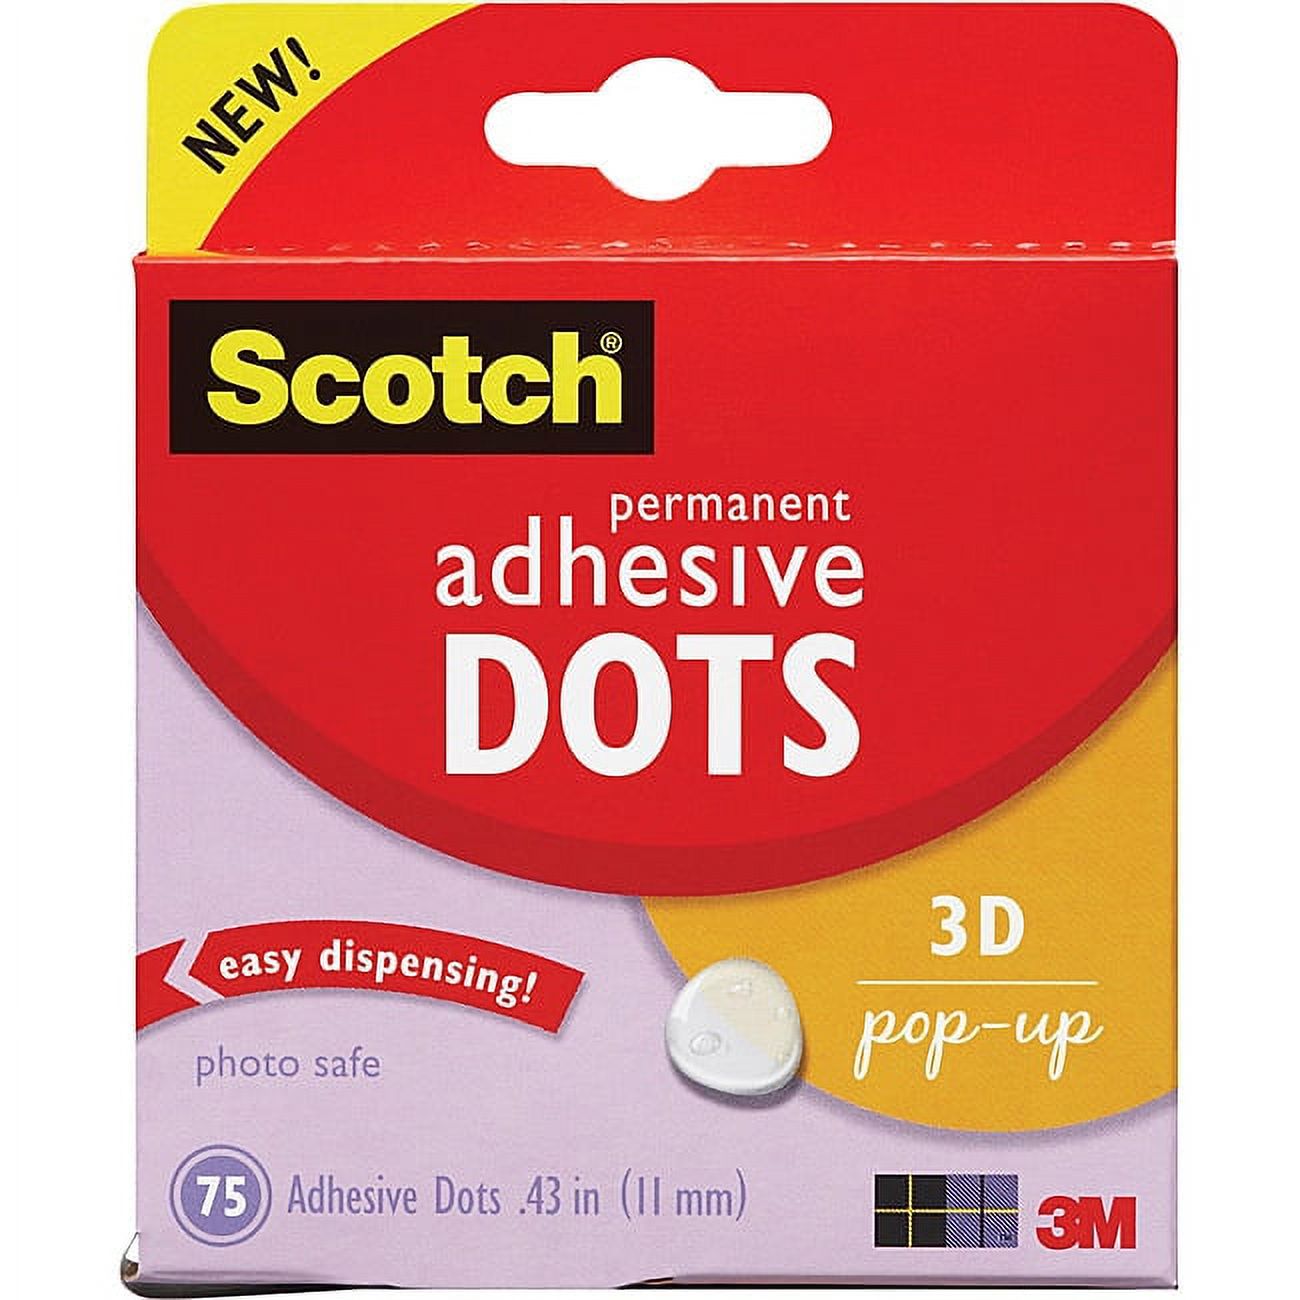 Scotch Permanent Adhesive Dots-3D Pop-Up .43" 75/Pkg - image 2 of 3